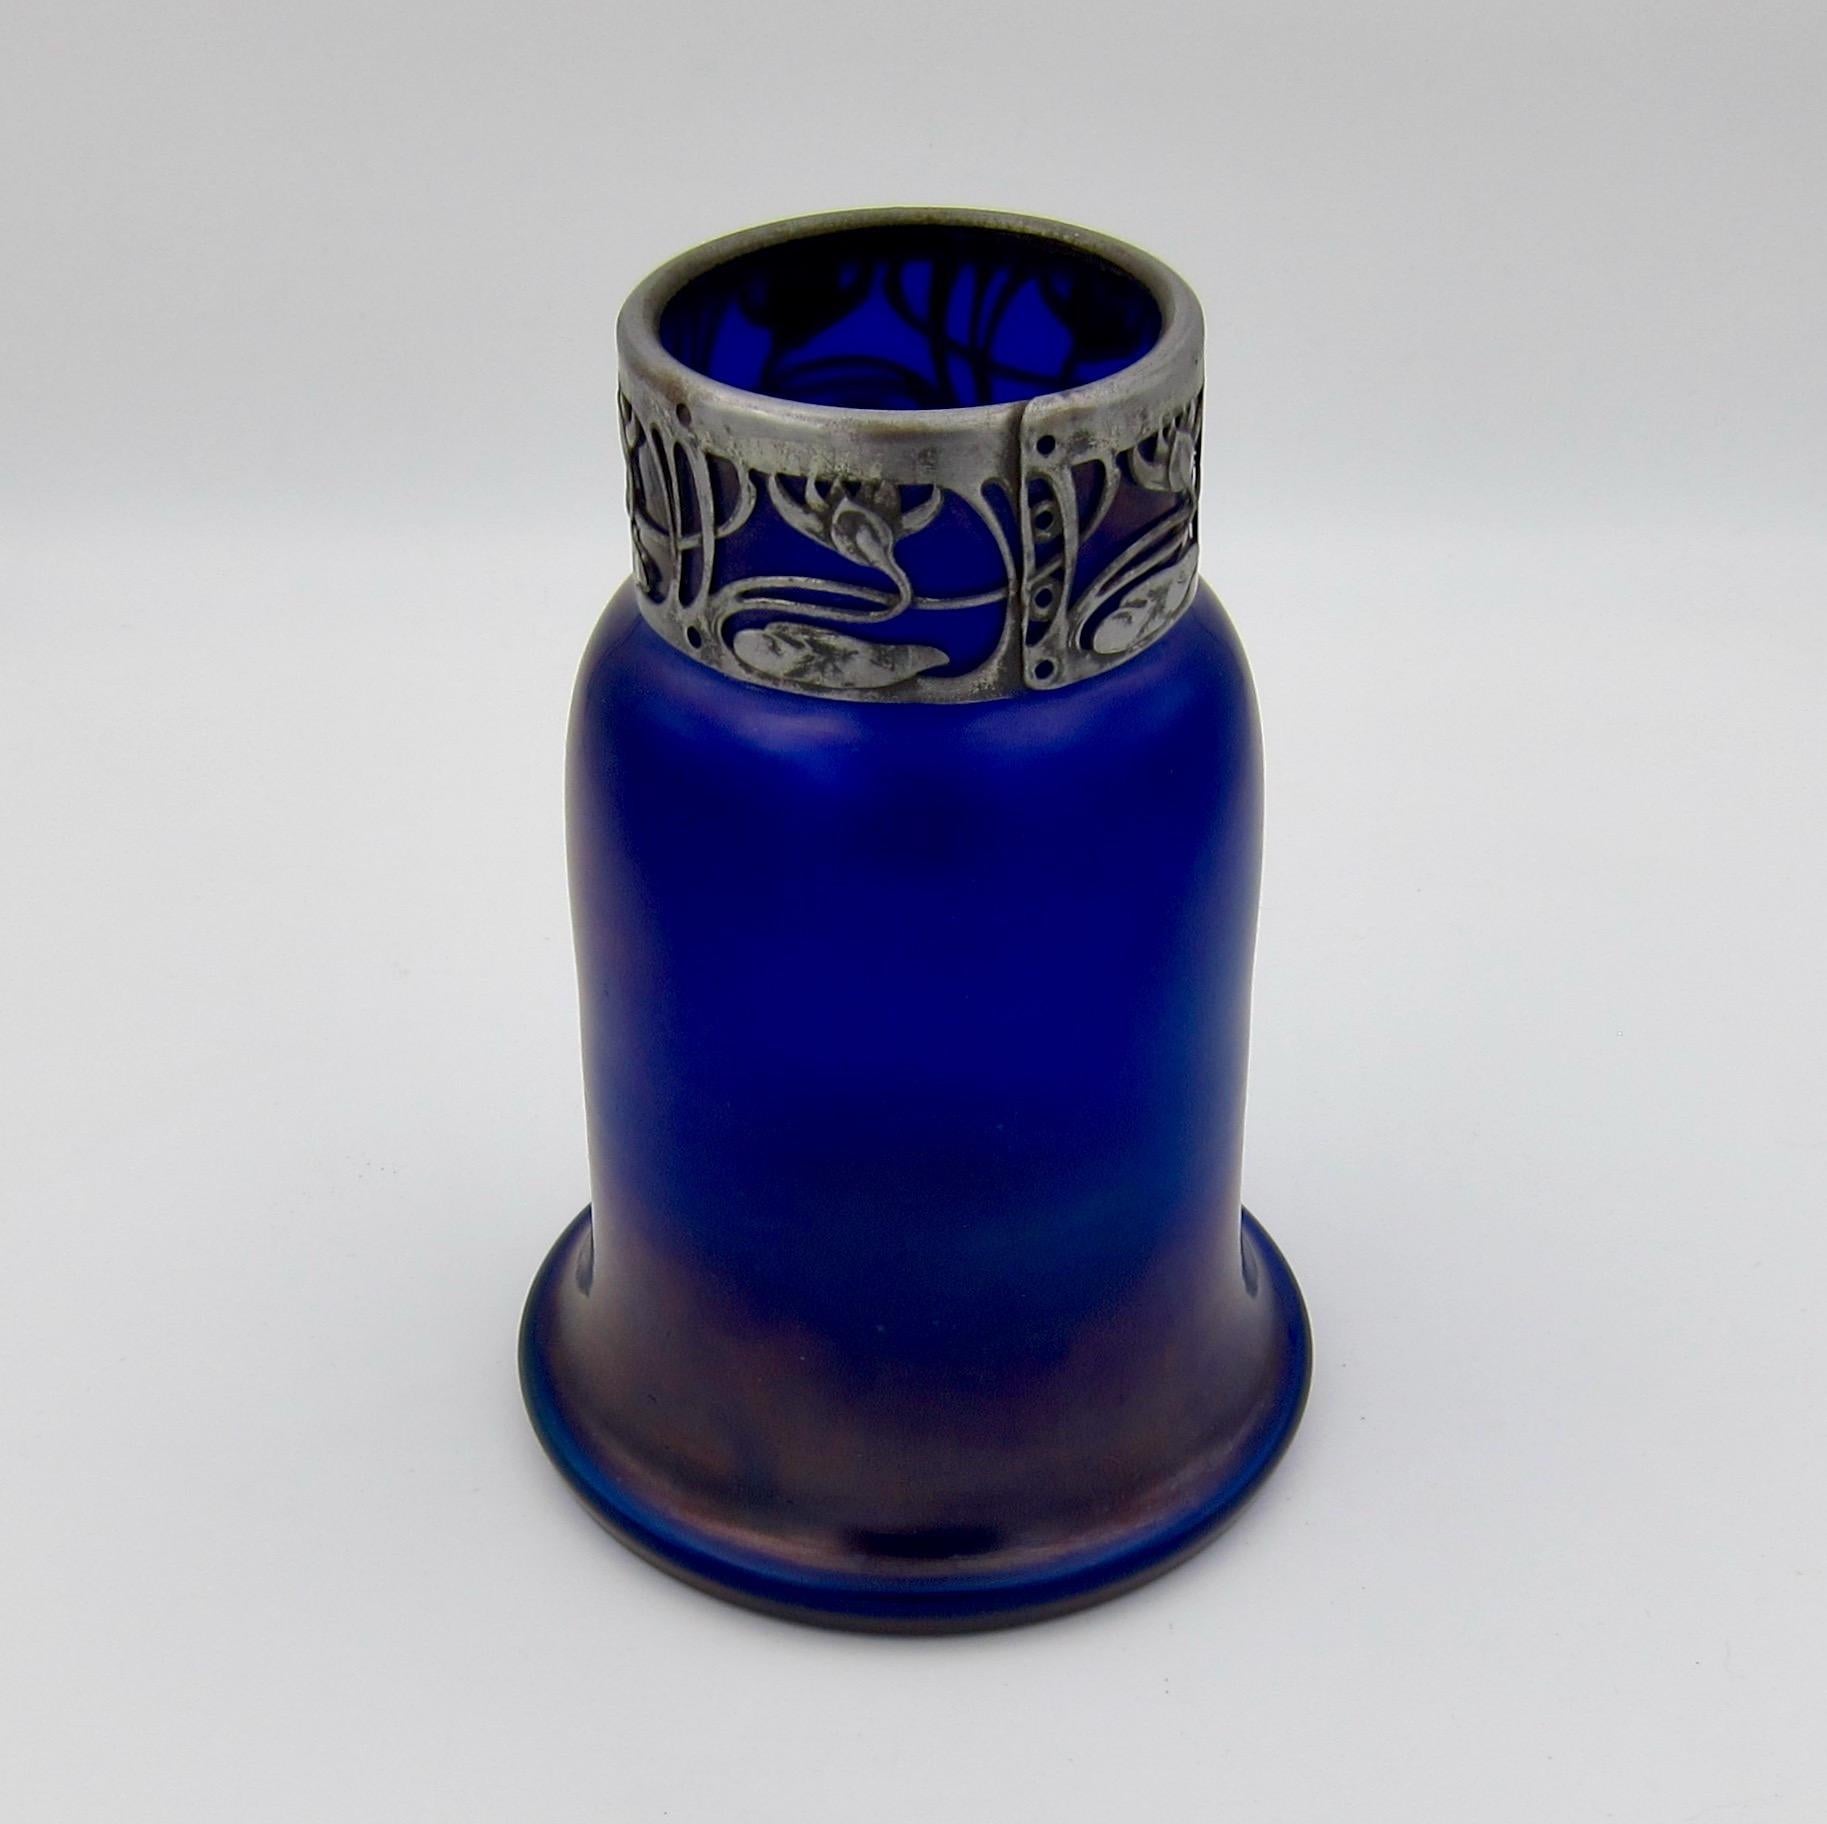 20th Century Austrian Iridescent Blue Art Glass Vase with an Art Nouveau Silver Metal Collar